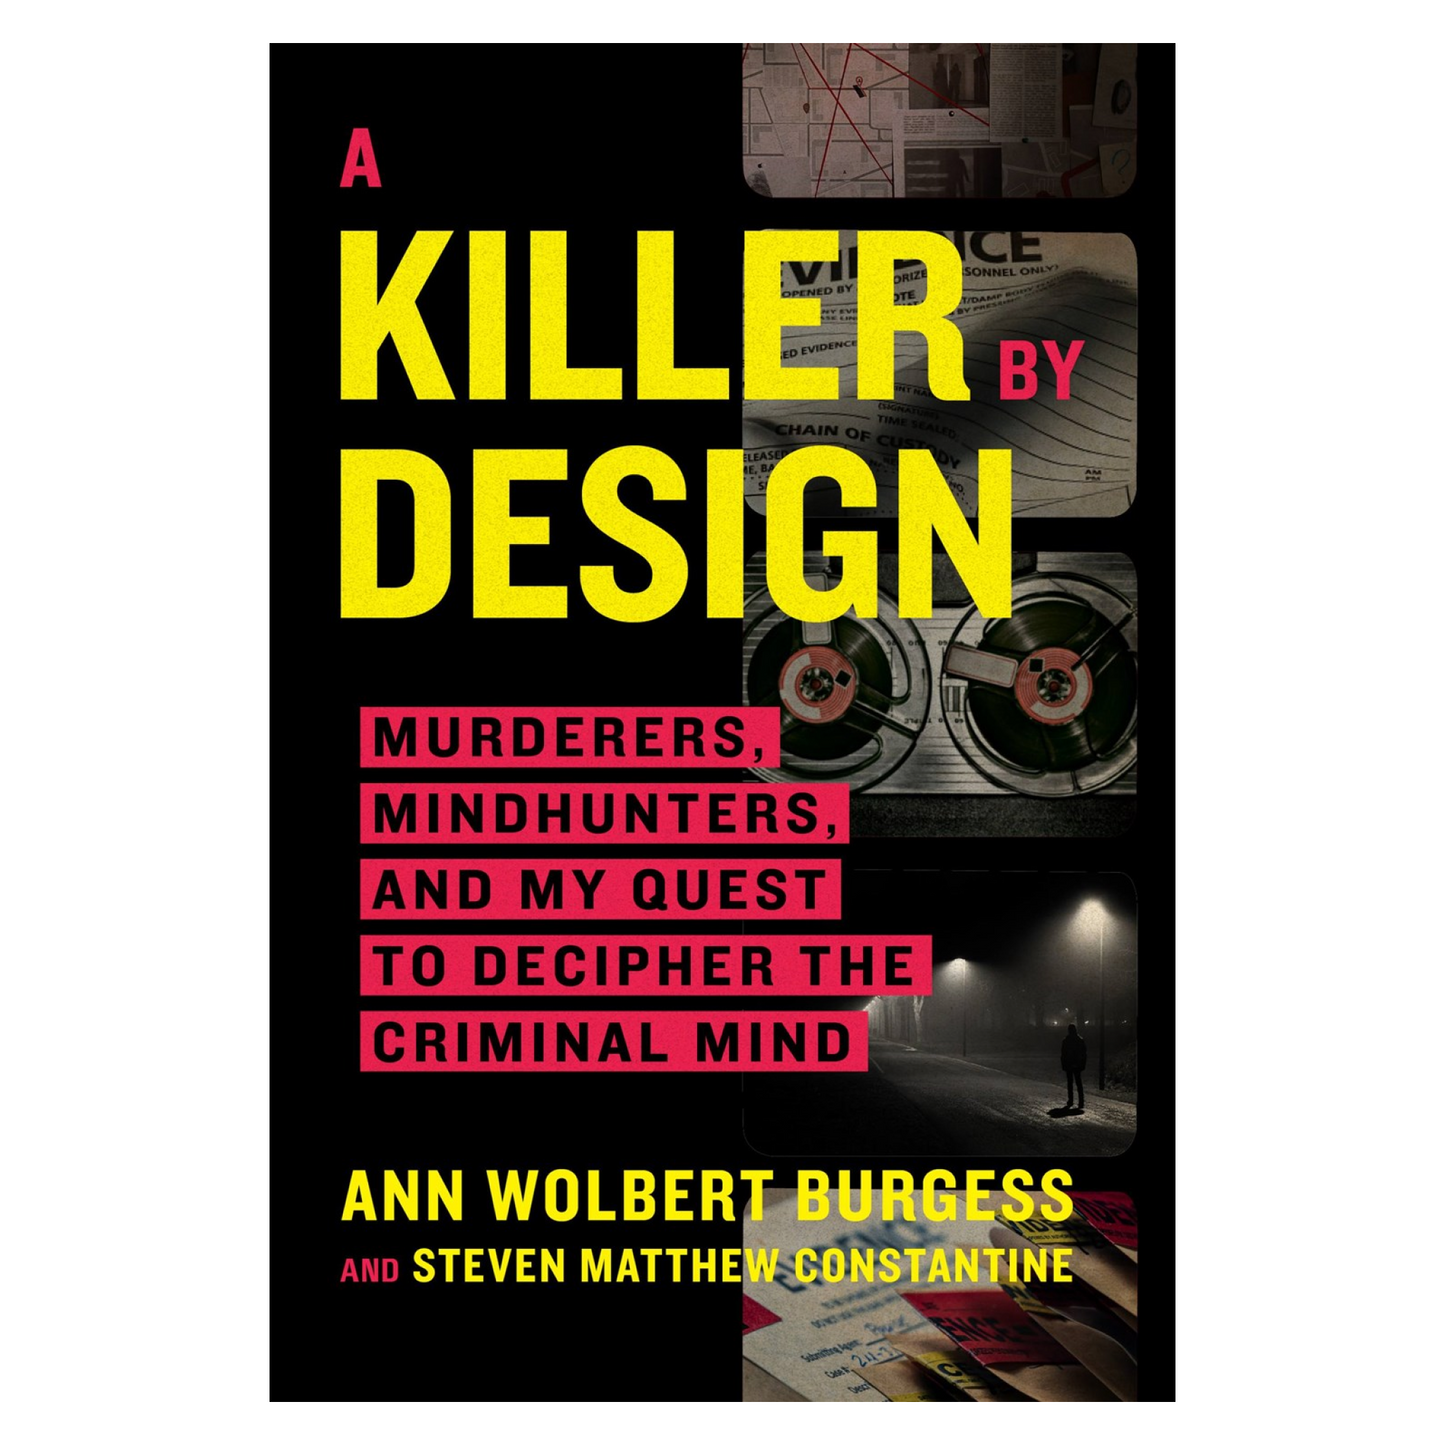 A Killer by Design